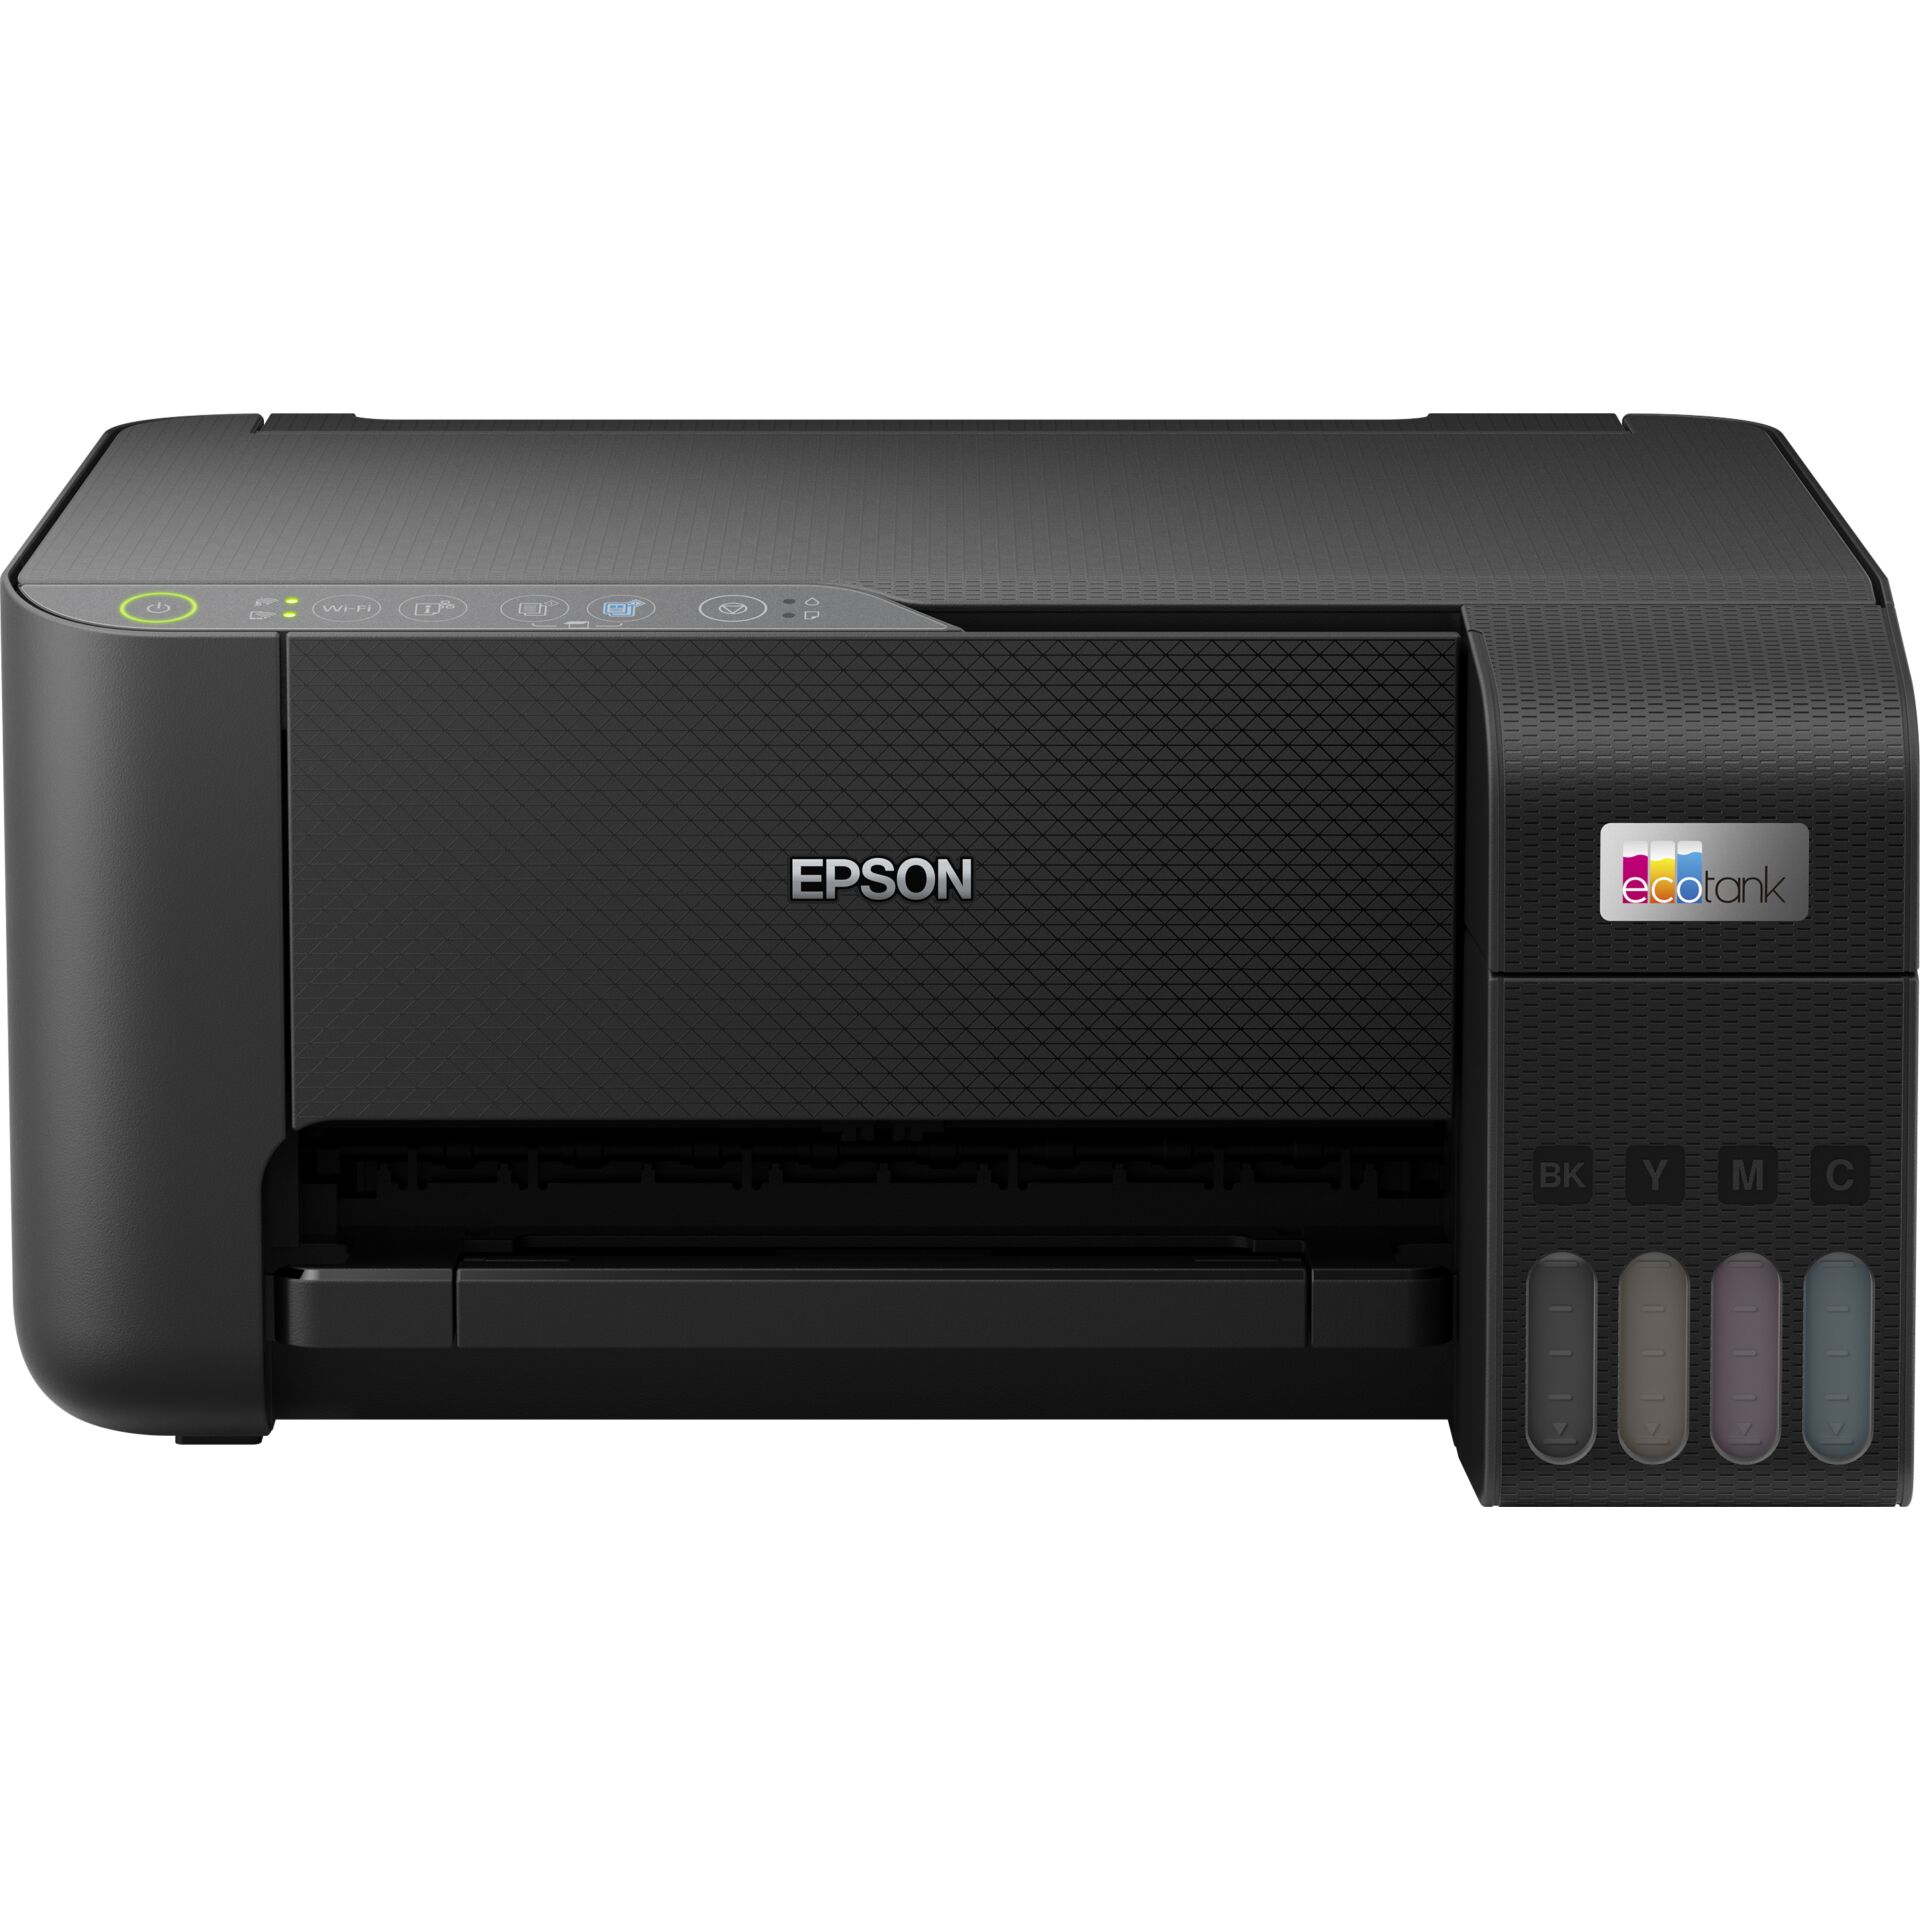 Epson EcoTank ET-2810, WLAN, Tinte, mehrfarbig- Multifunktionsgerät, Drucker/Scanner/Kopierer